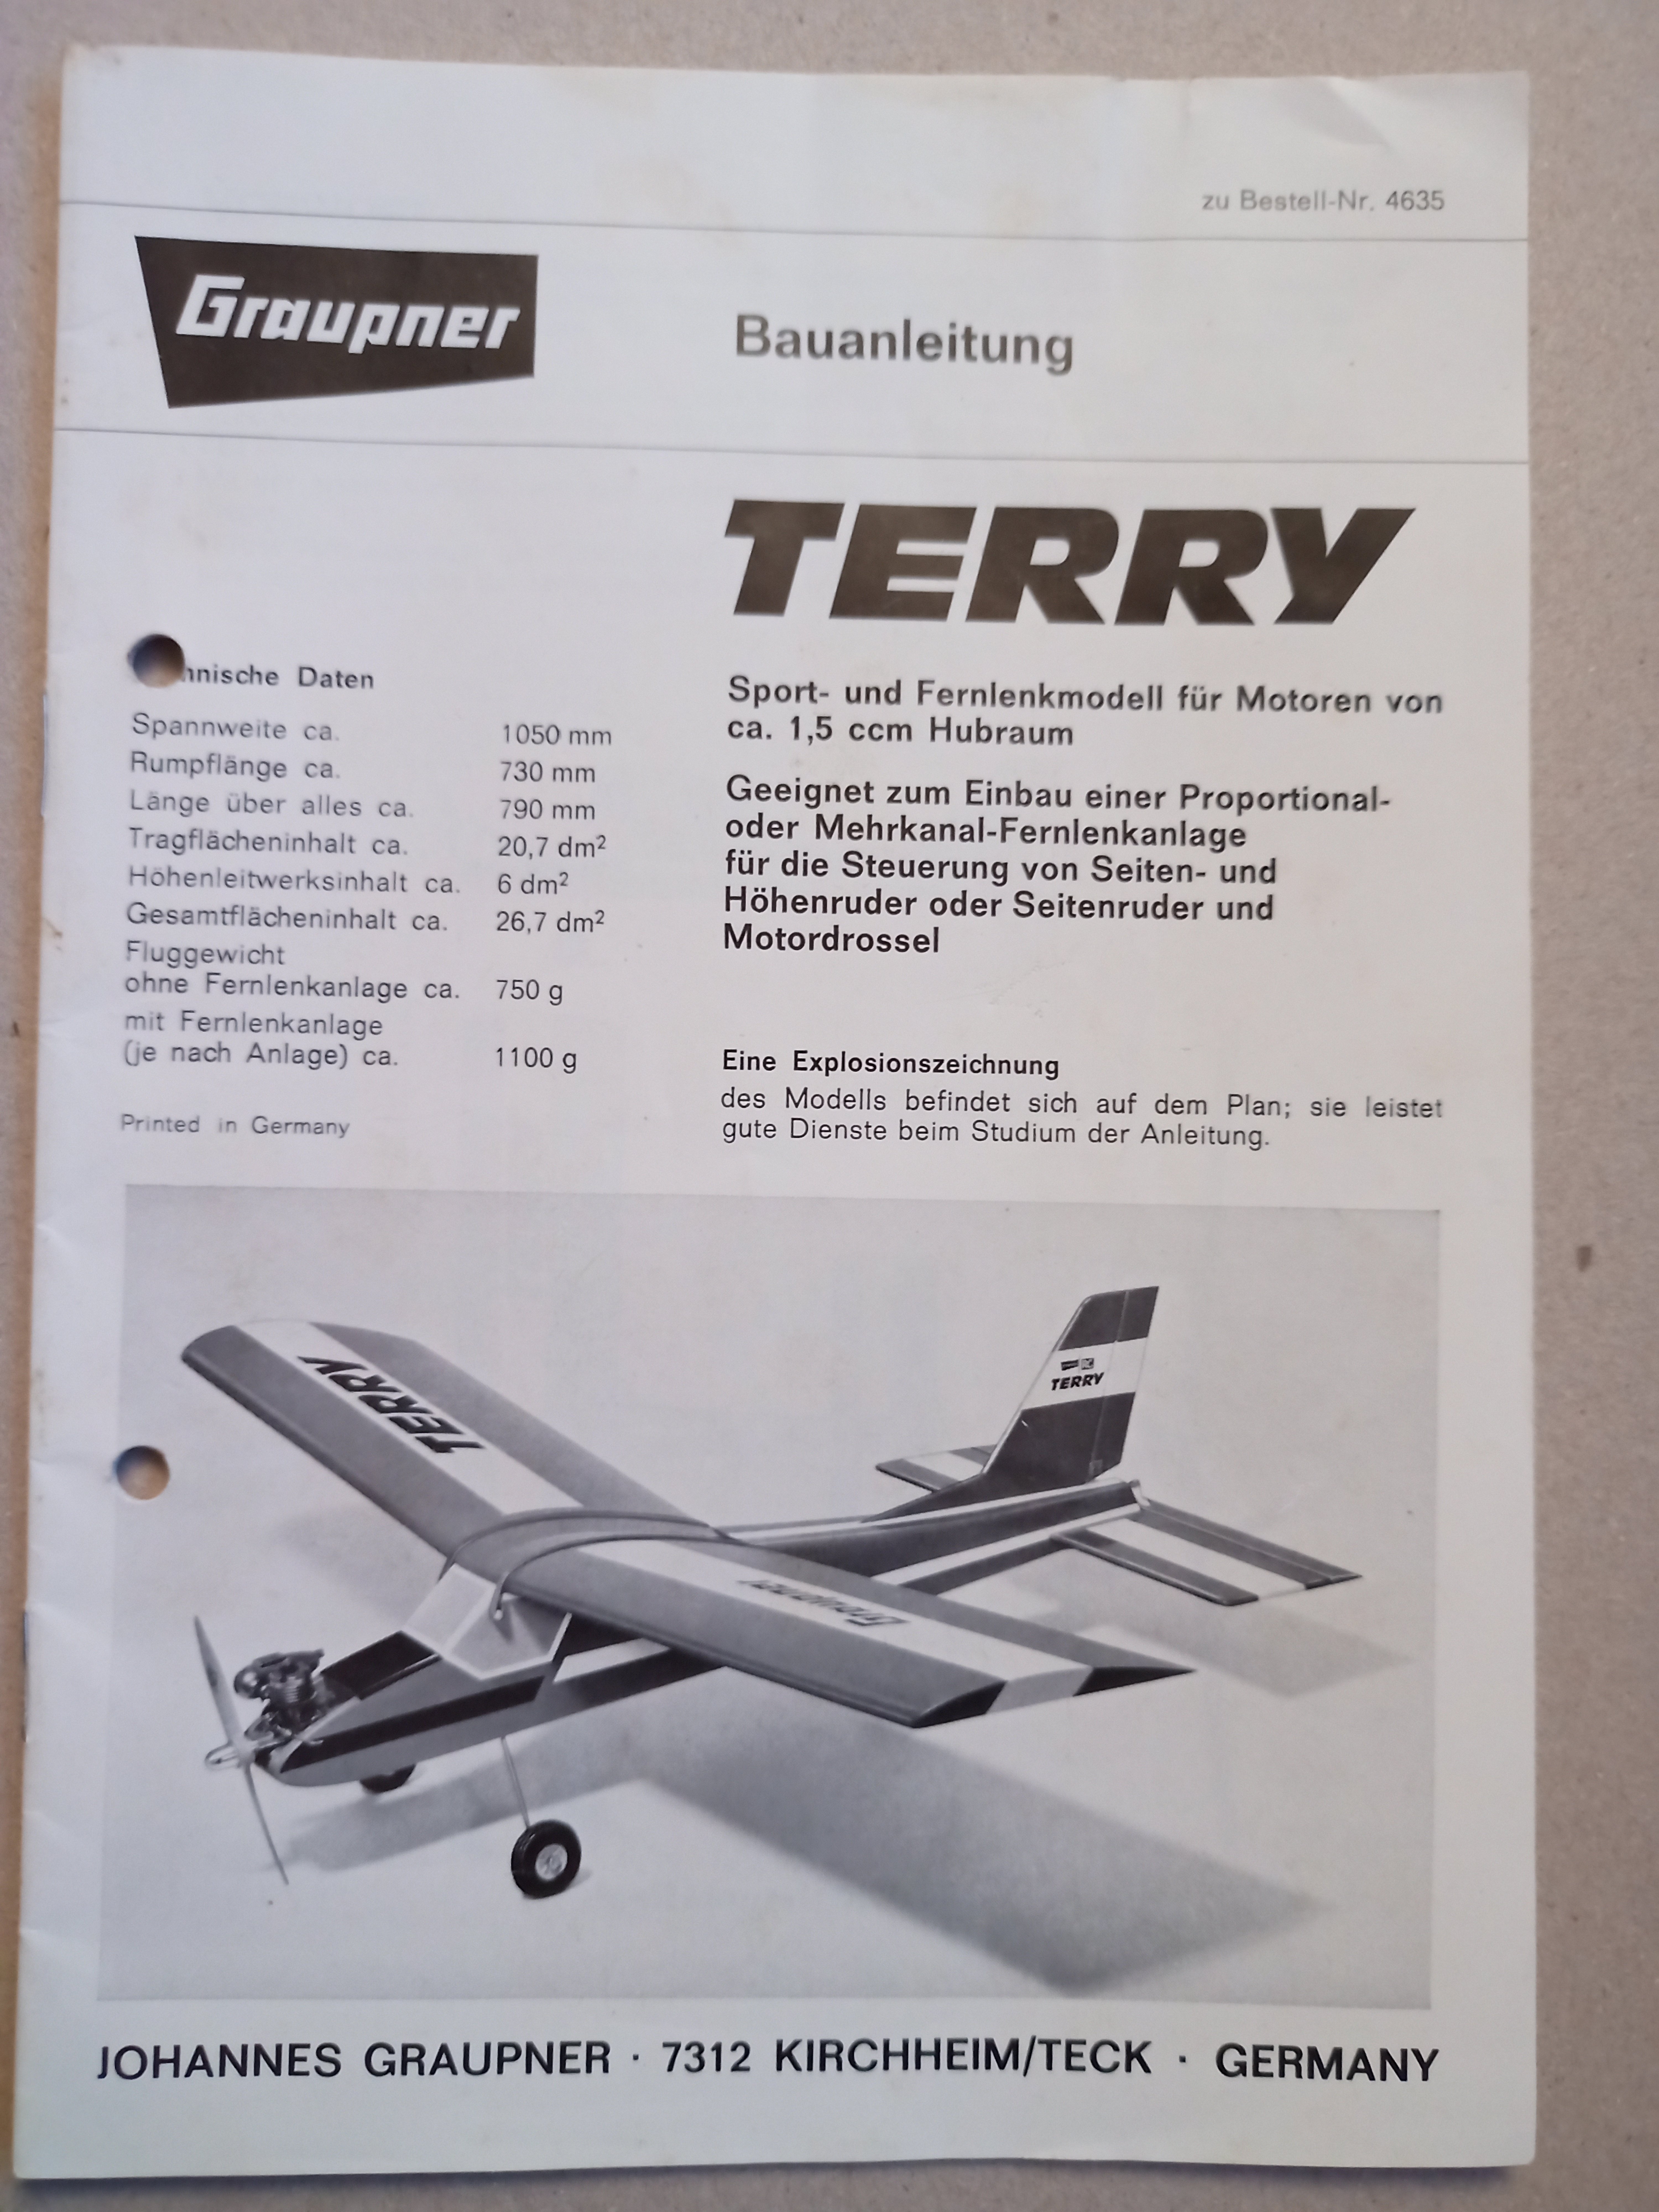 Graupner Bauanleitung Terry (Deutsches Segelflugmuseum mit Modellflug CC BY-NC-SA)